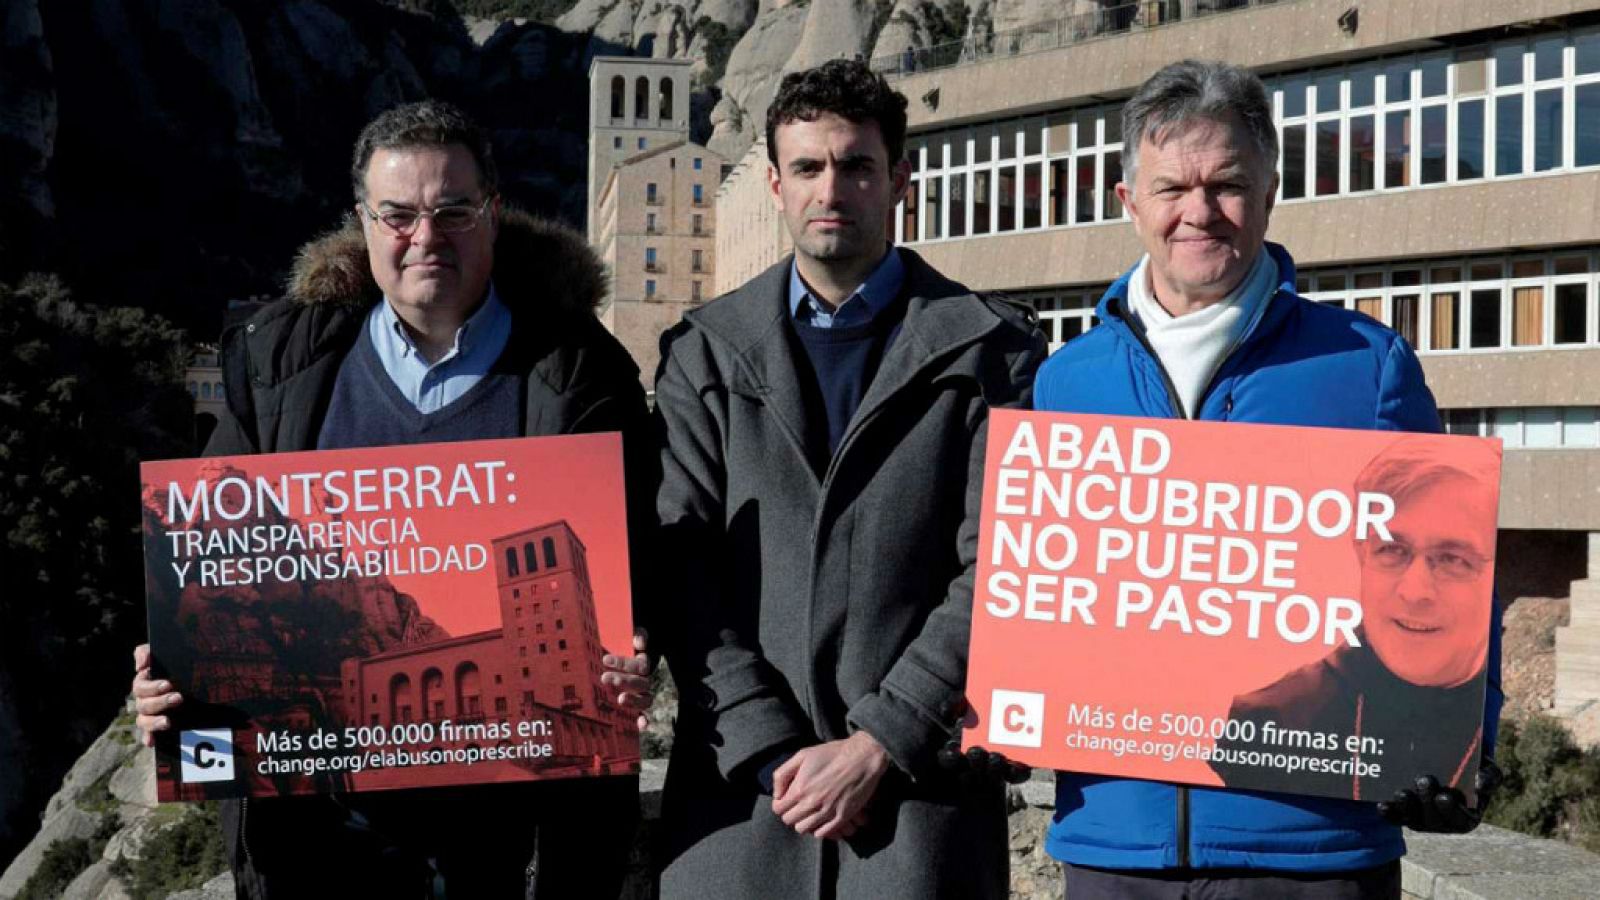  14 horas - España: ni informes, ni cálculos sobre abusos en la Iglesia - Escuchar ahora